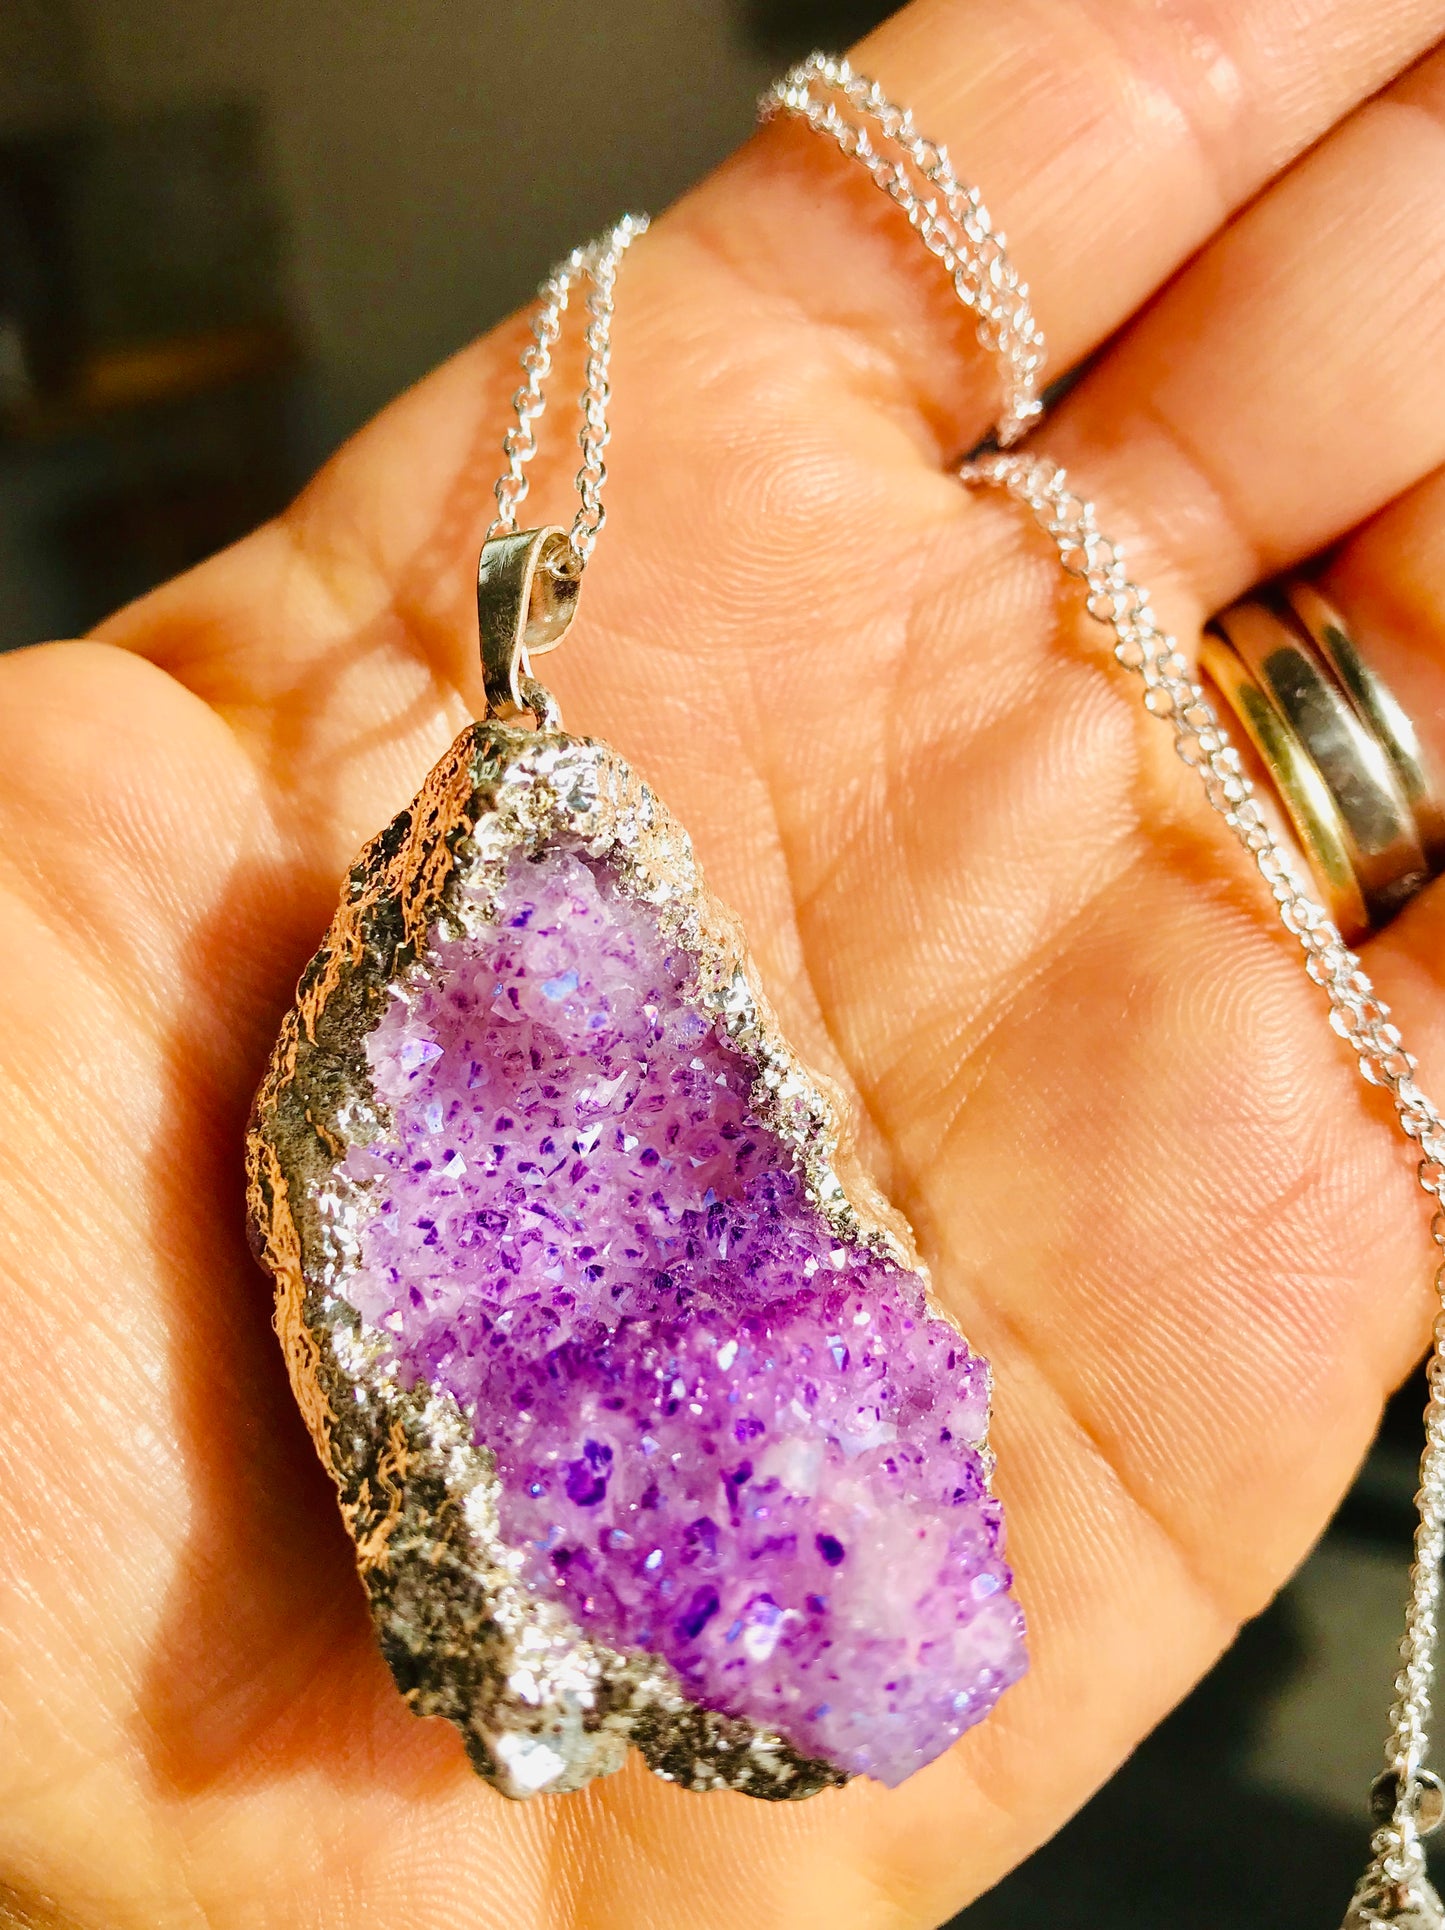 Druzy Crystal Healing Quartz Pendant Necklace - Lilac - Crystal Boutique.co.uk 